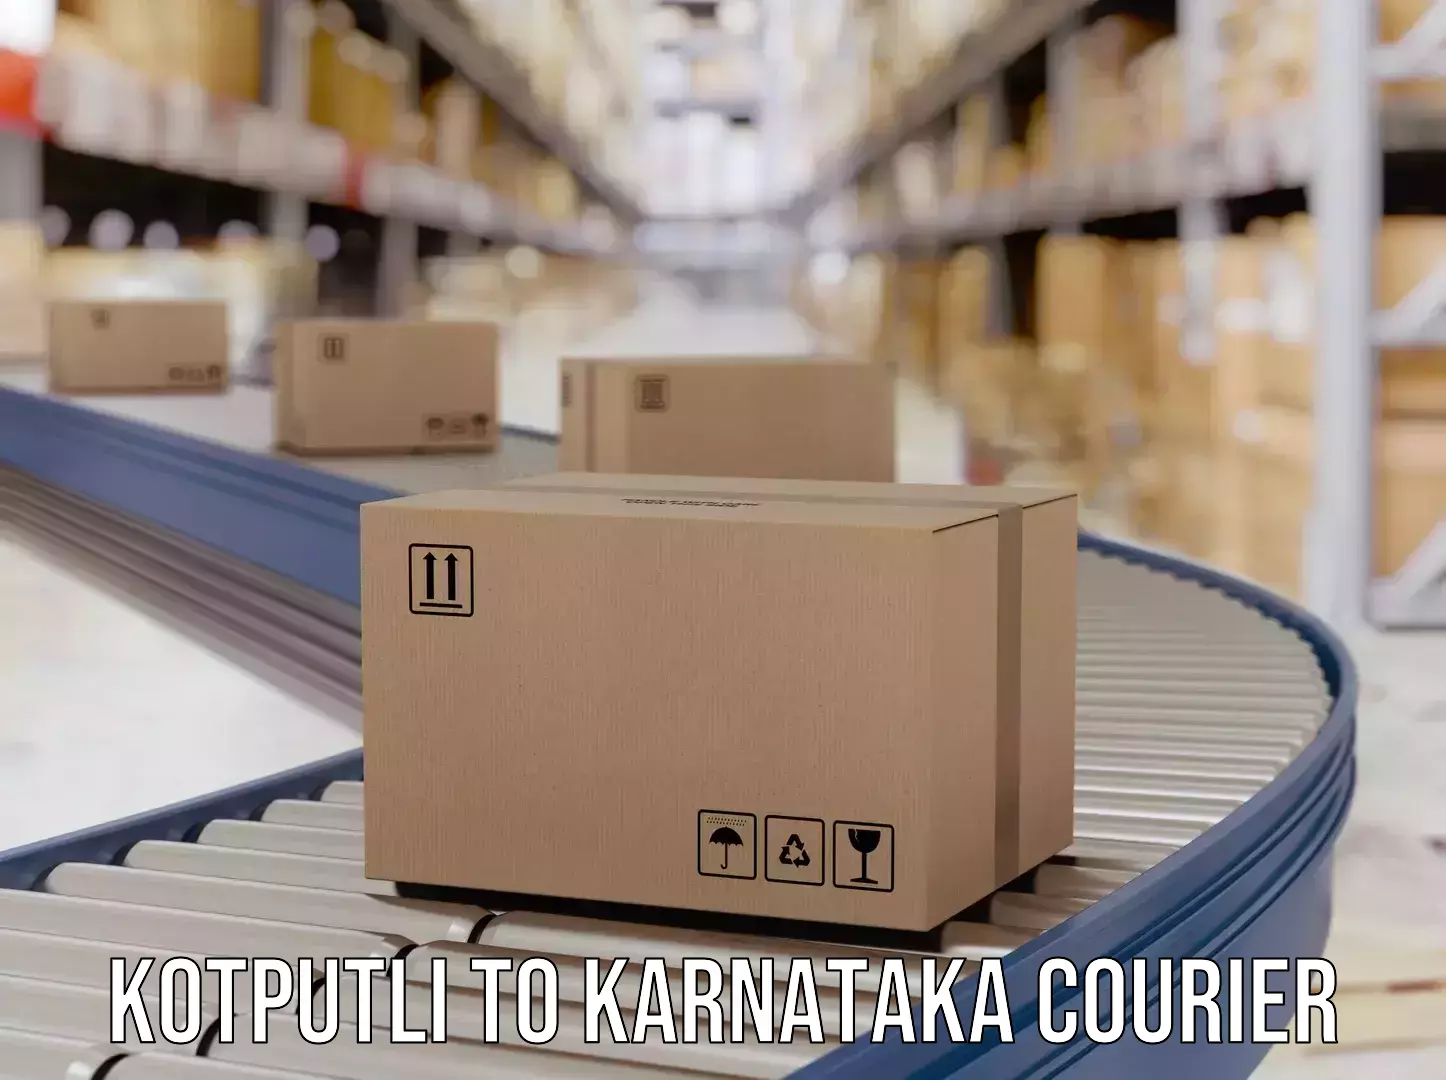 Supply chain efficiency Kotputli to Tikota